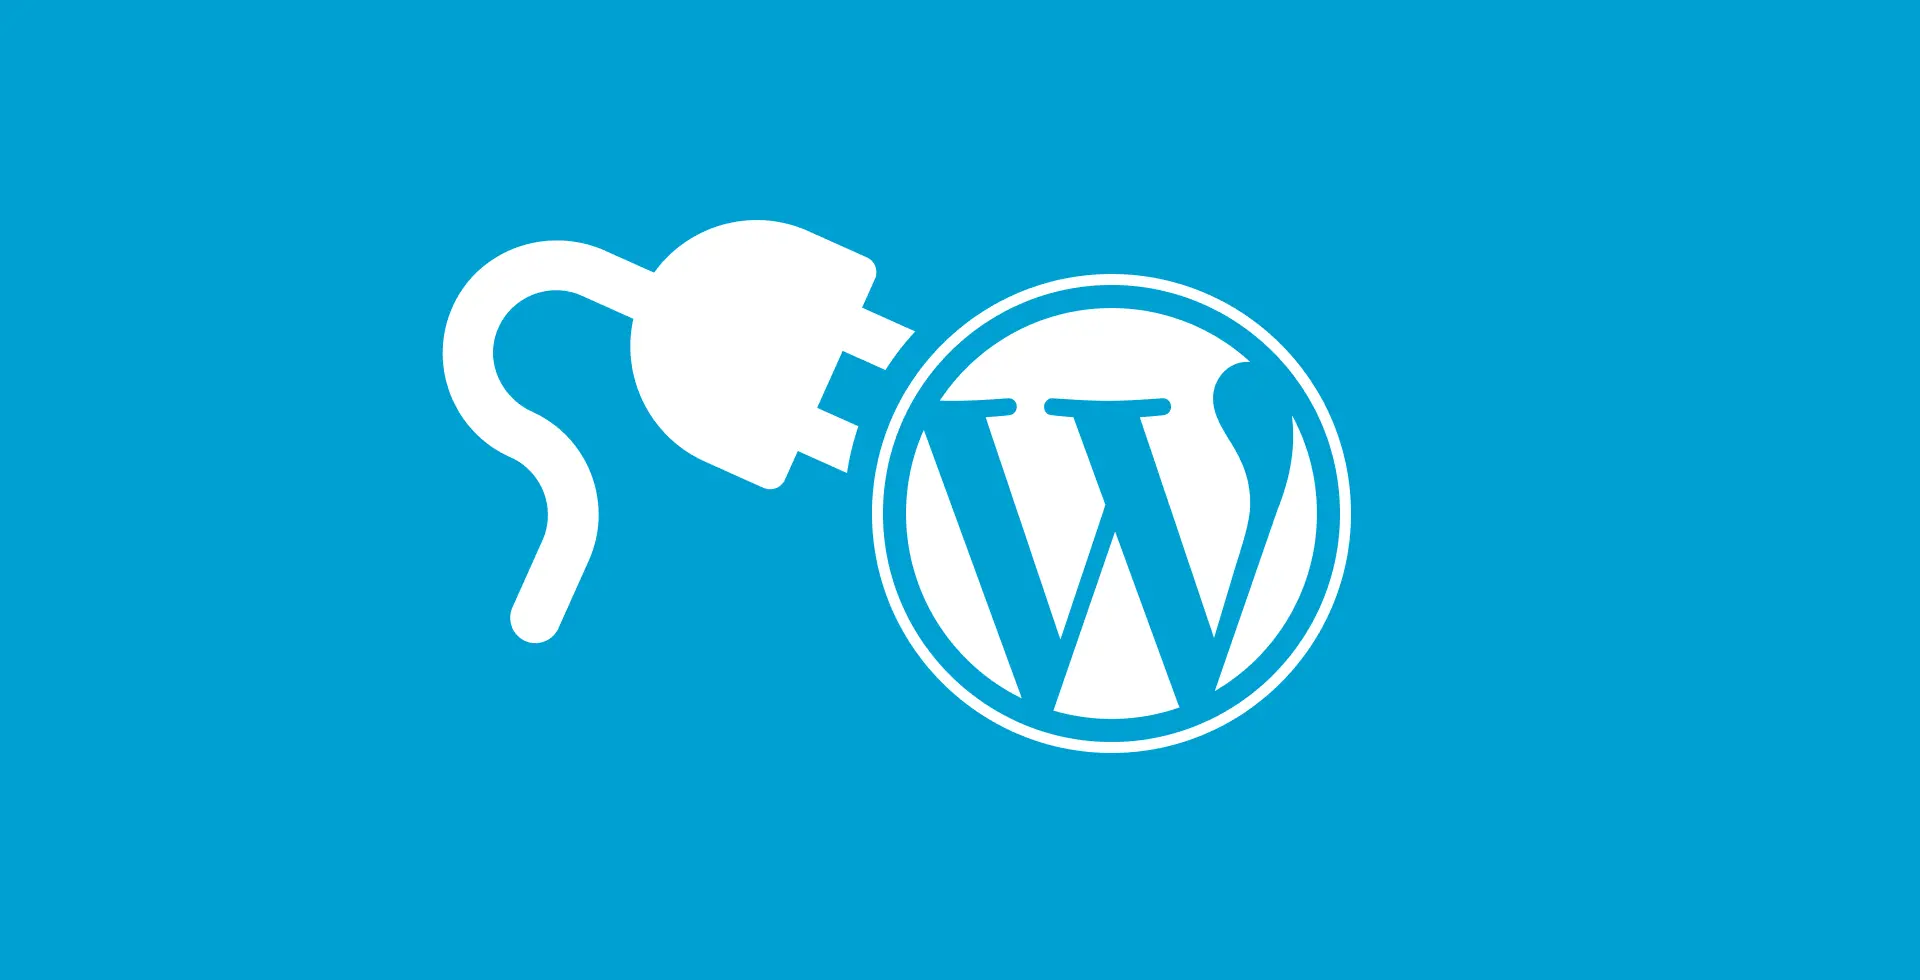 Top 7 plugins we use daily to create custom WordPress themes | webredone.com